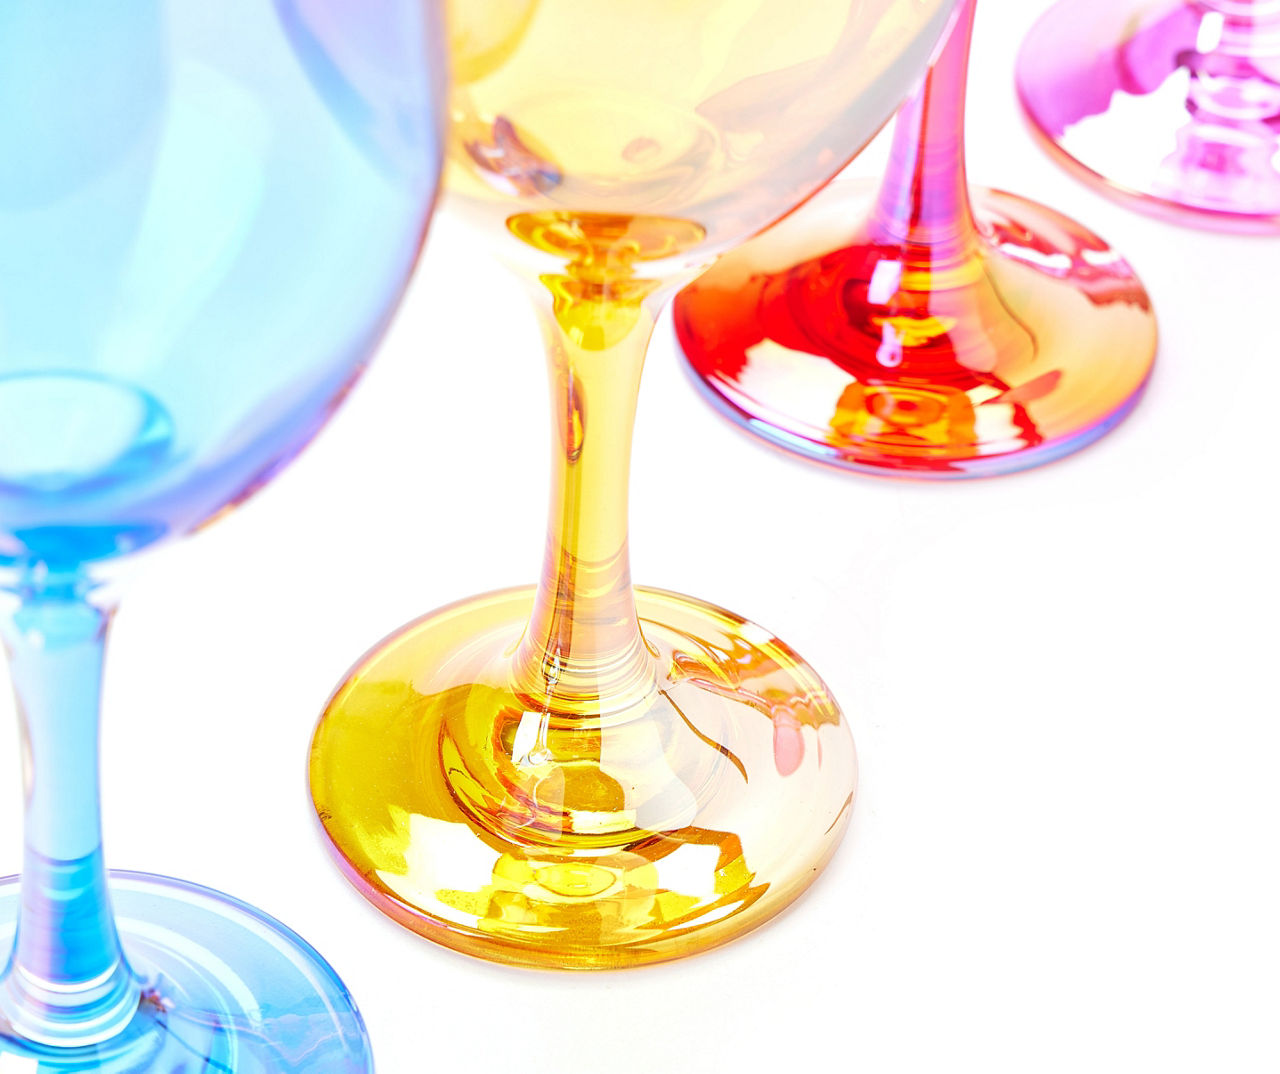 Set of 4 Extra Large Iridescent Wine Glass